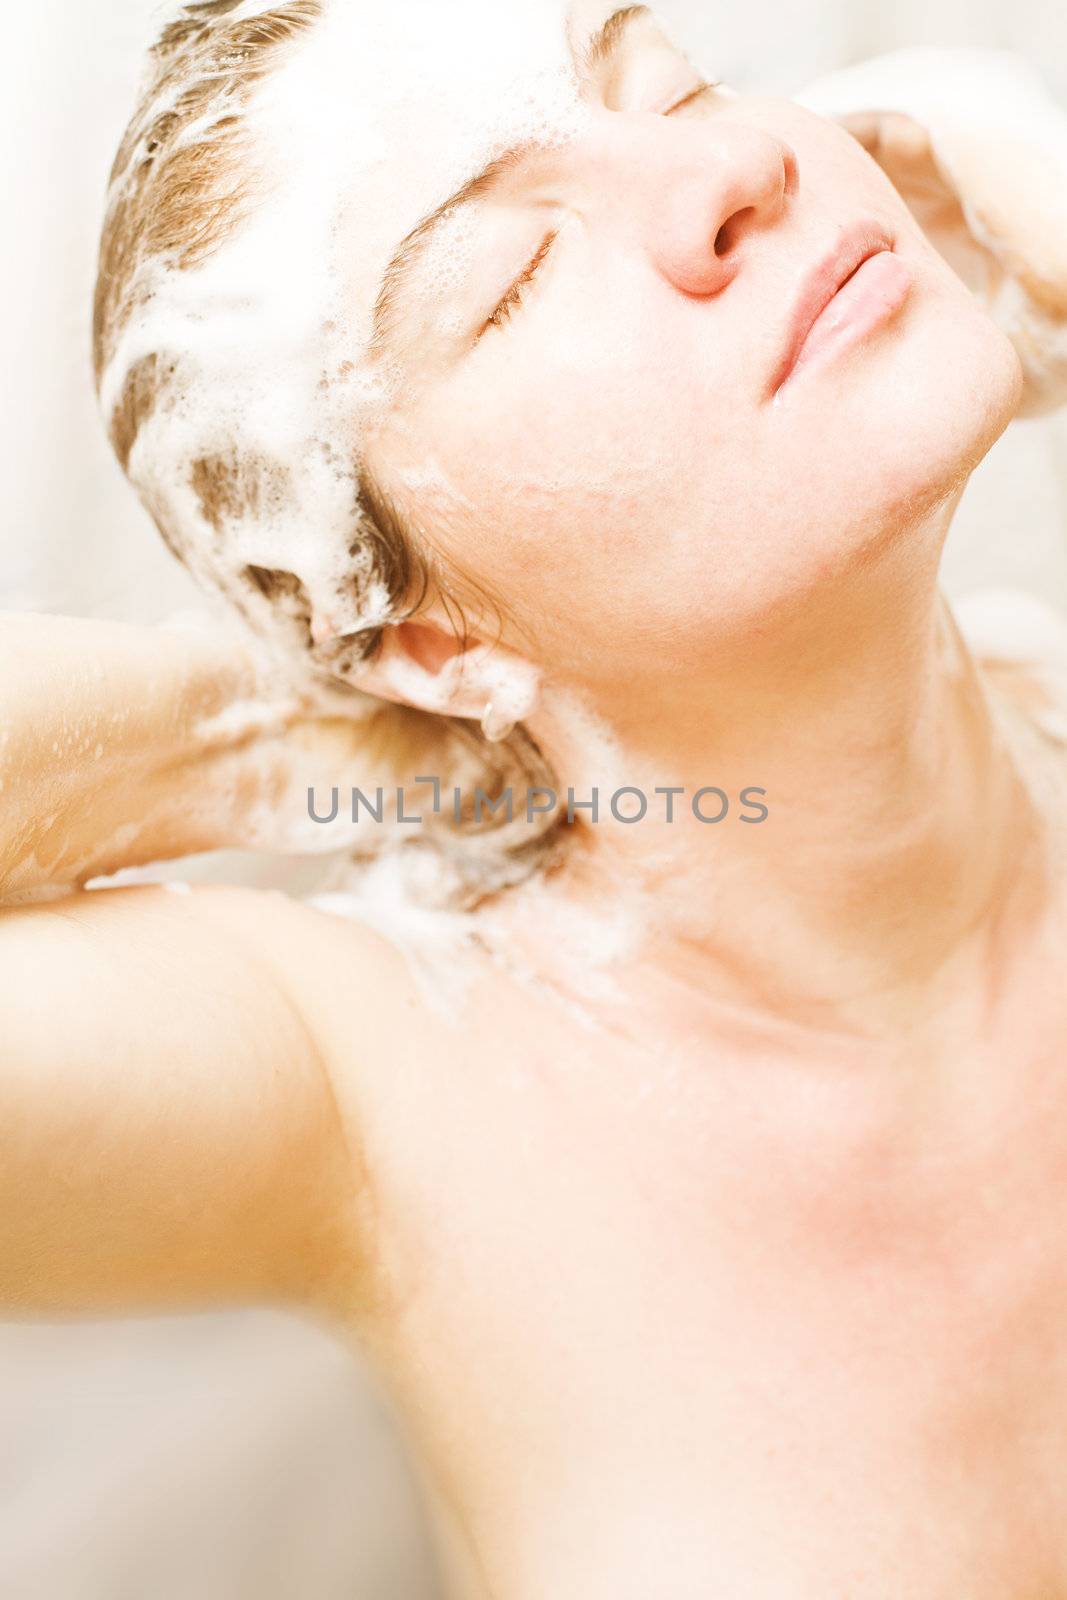 people series: woman to shampoo one's hair